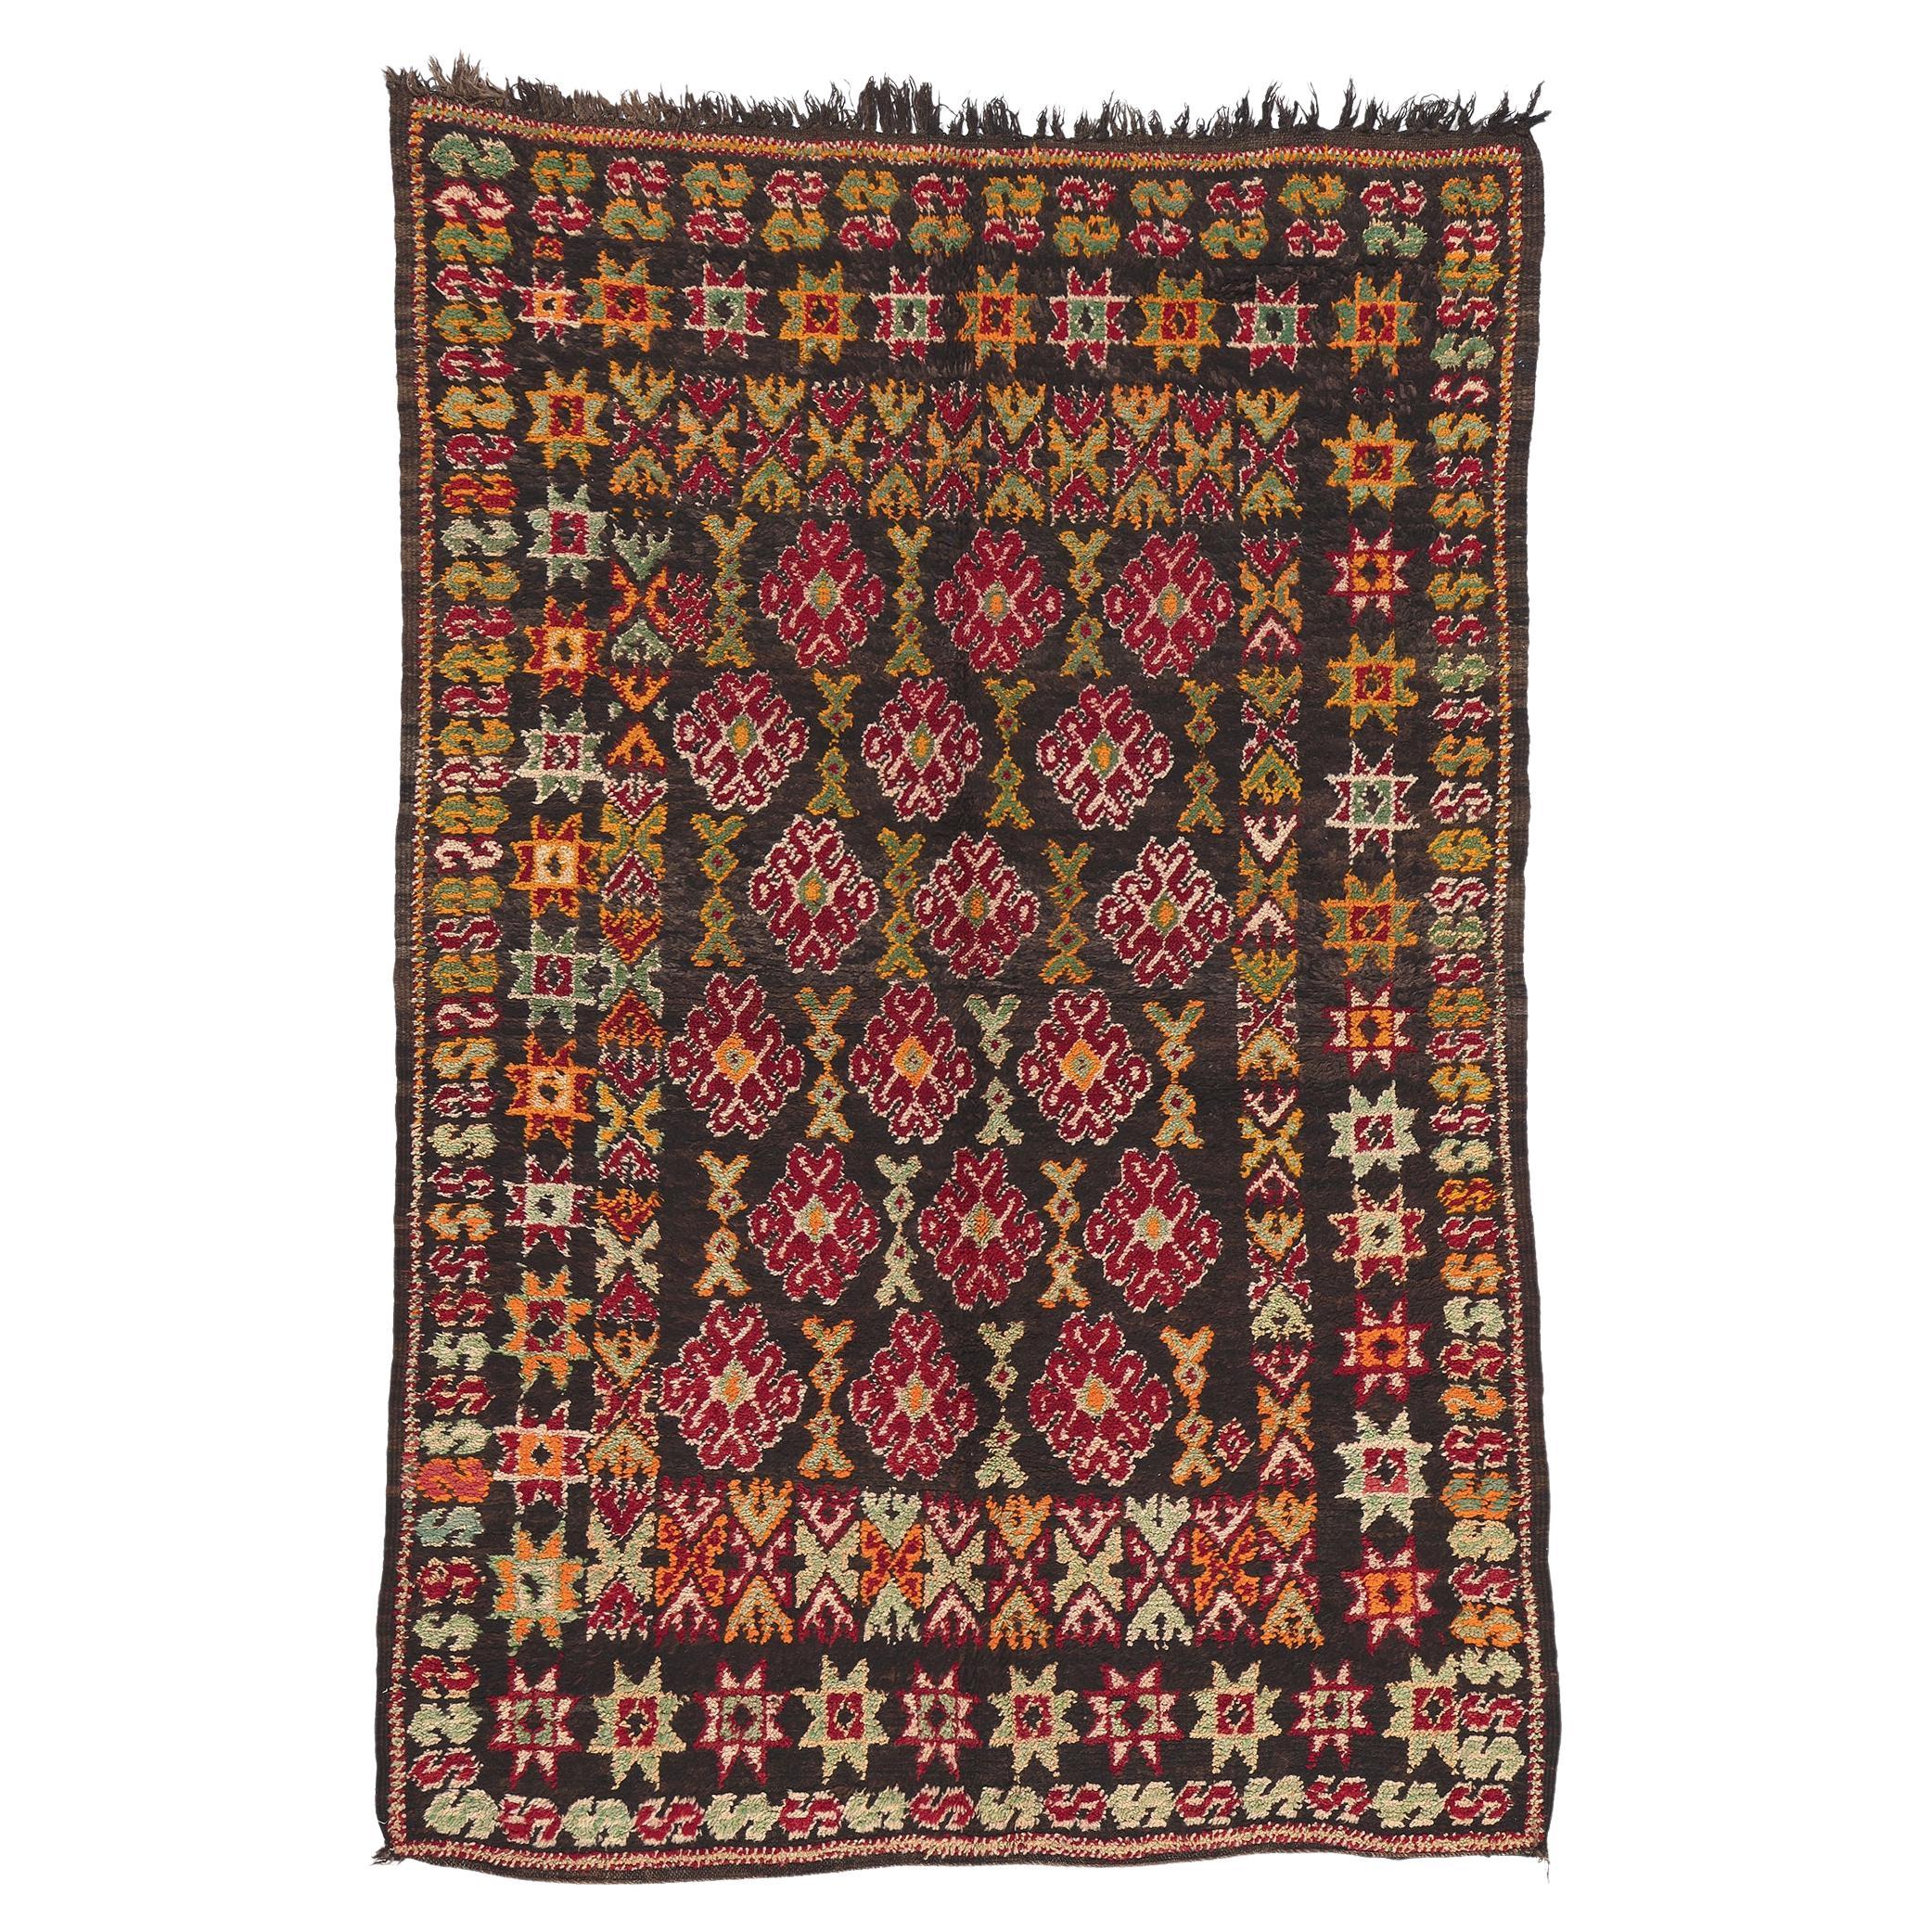 Vintage Beni MGuild Moroccan Rug , Tribal Enchantment Meets Midcentury Modern For Sale